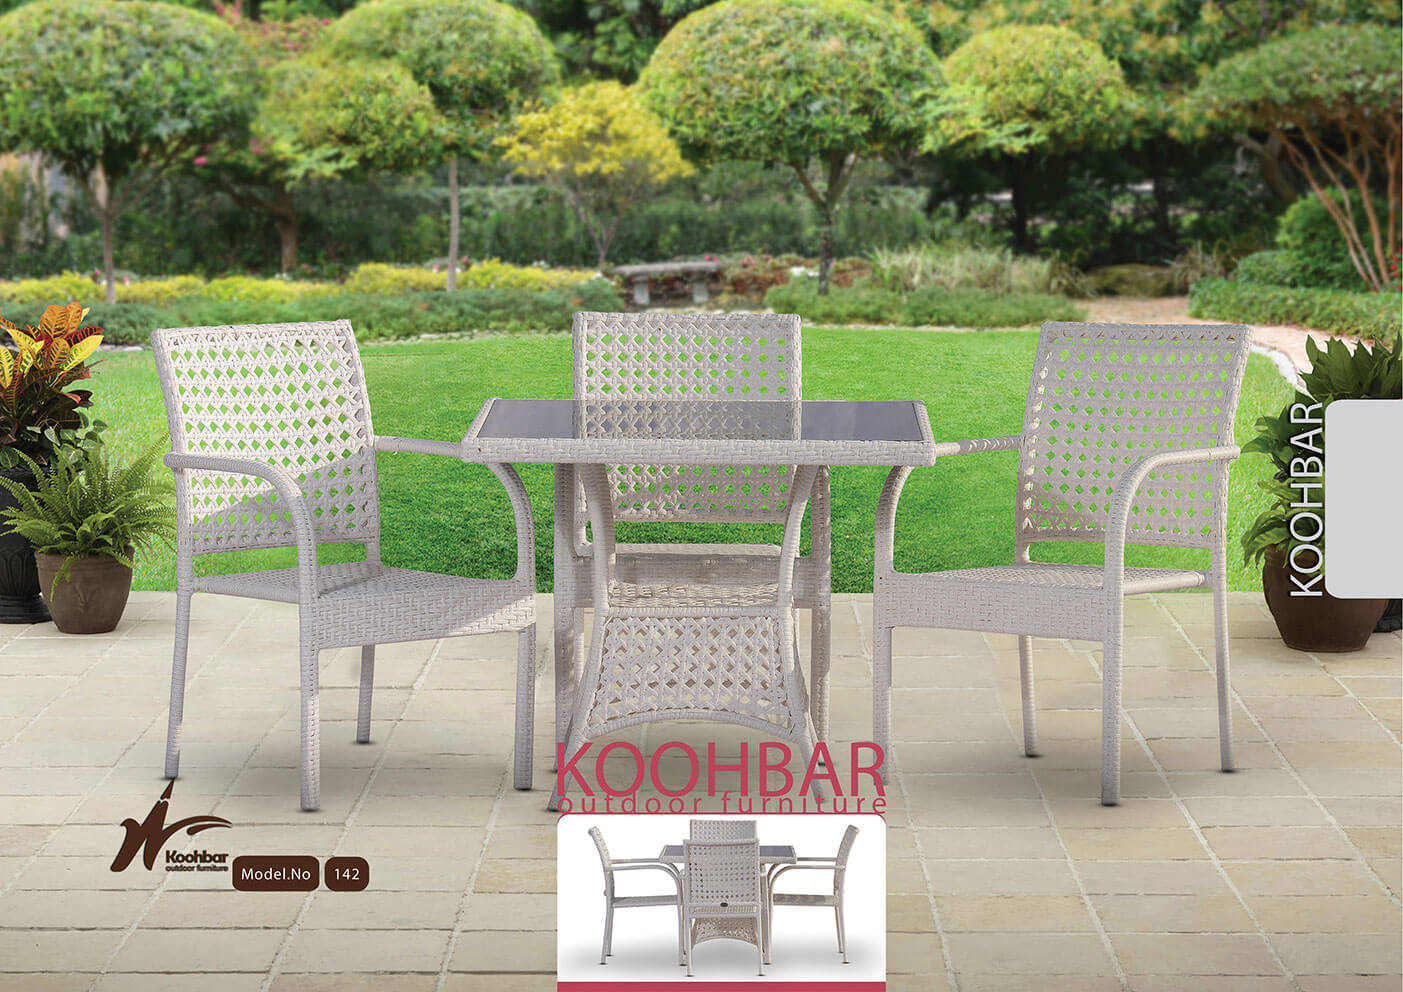 kohbar patio conversation sets 142 model0 - ست میز صندلی حصیری کوهبر مدل ۱۴۲ -  - patio-dining-furniture